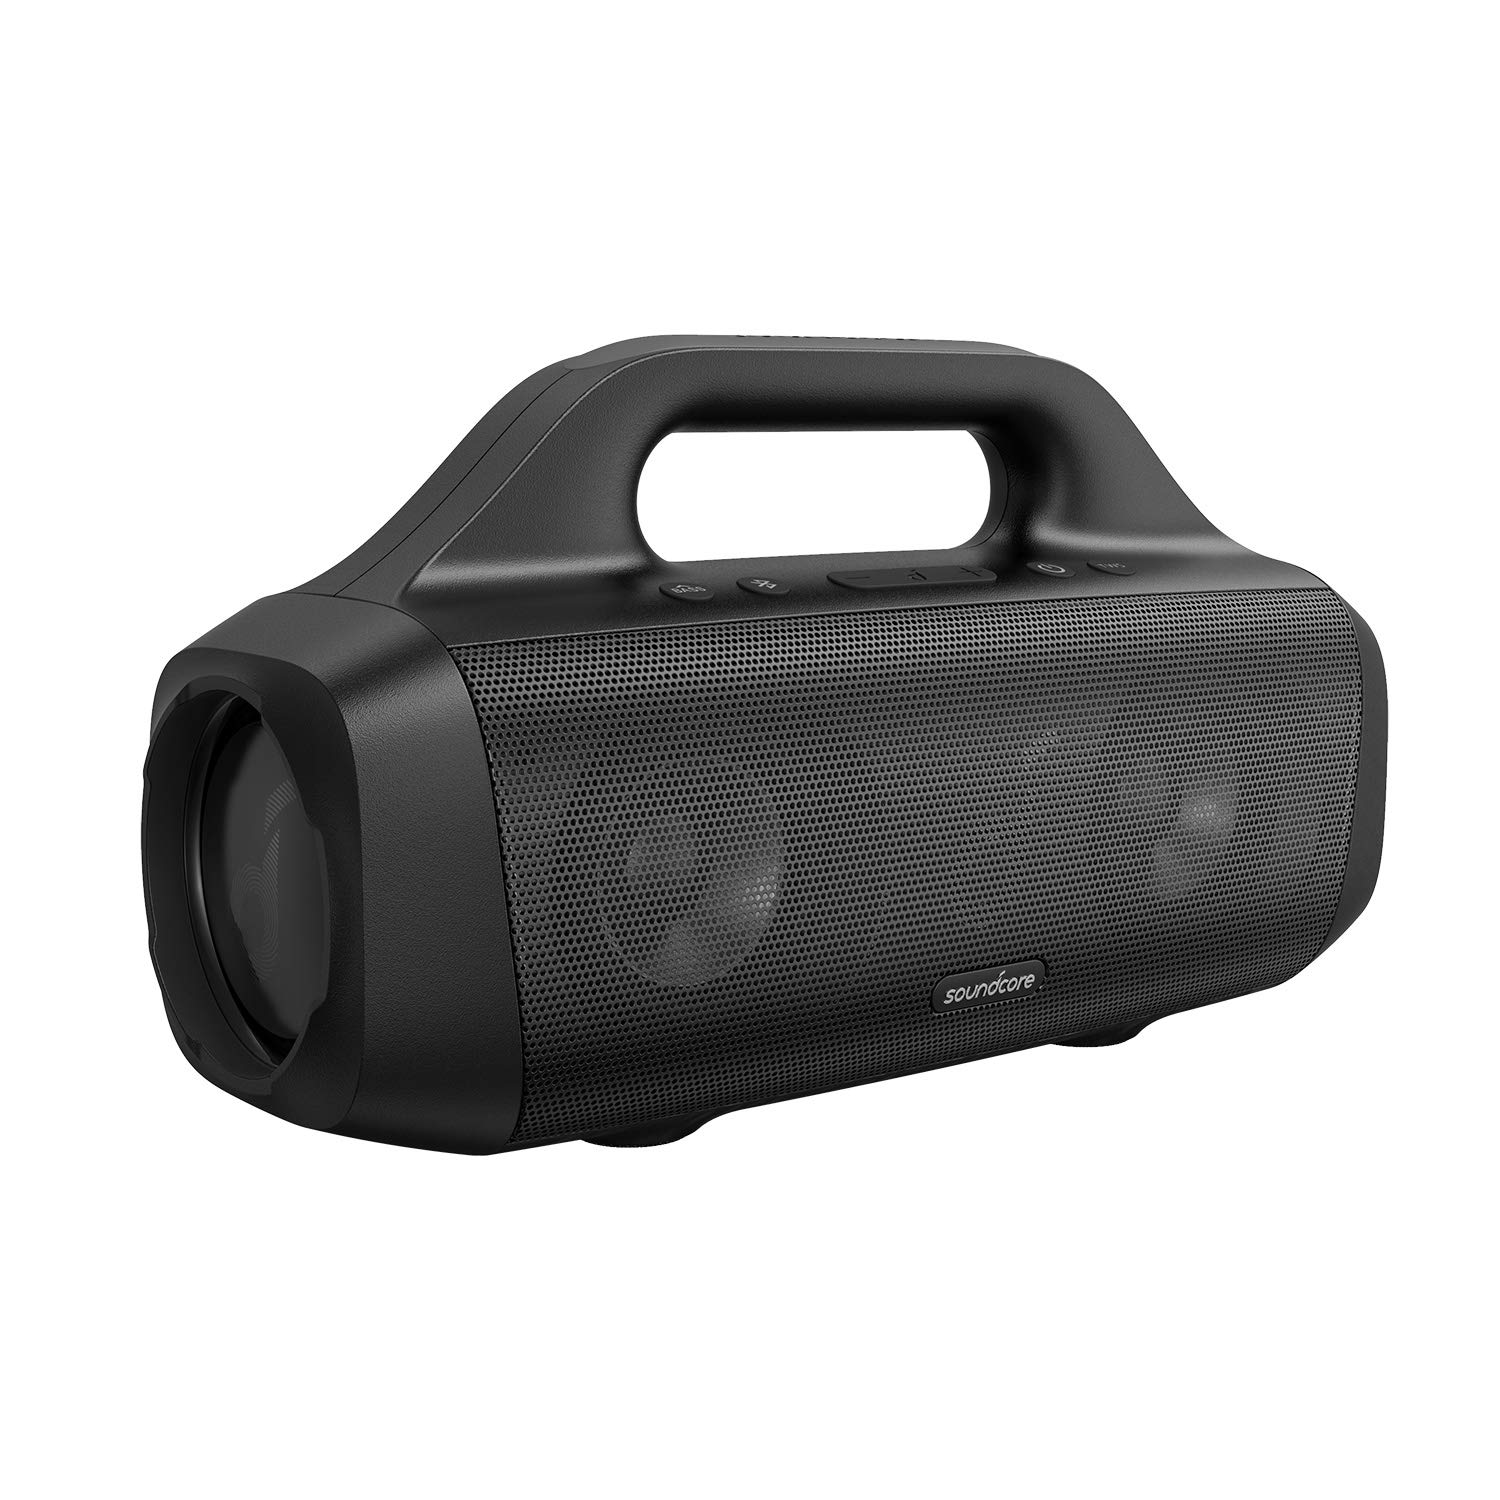 Anker Soundcore IPX7 Waterproof Bluetooth Speaker w/ Titanium Drivers $80 + Free Shipping